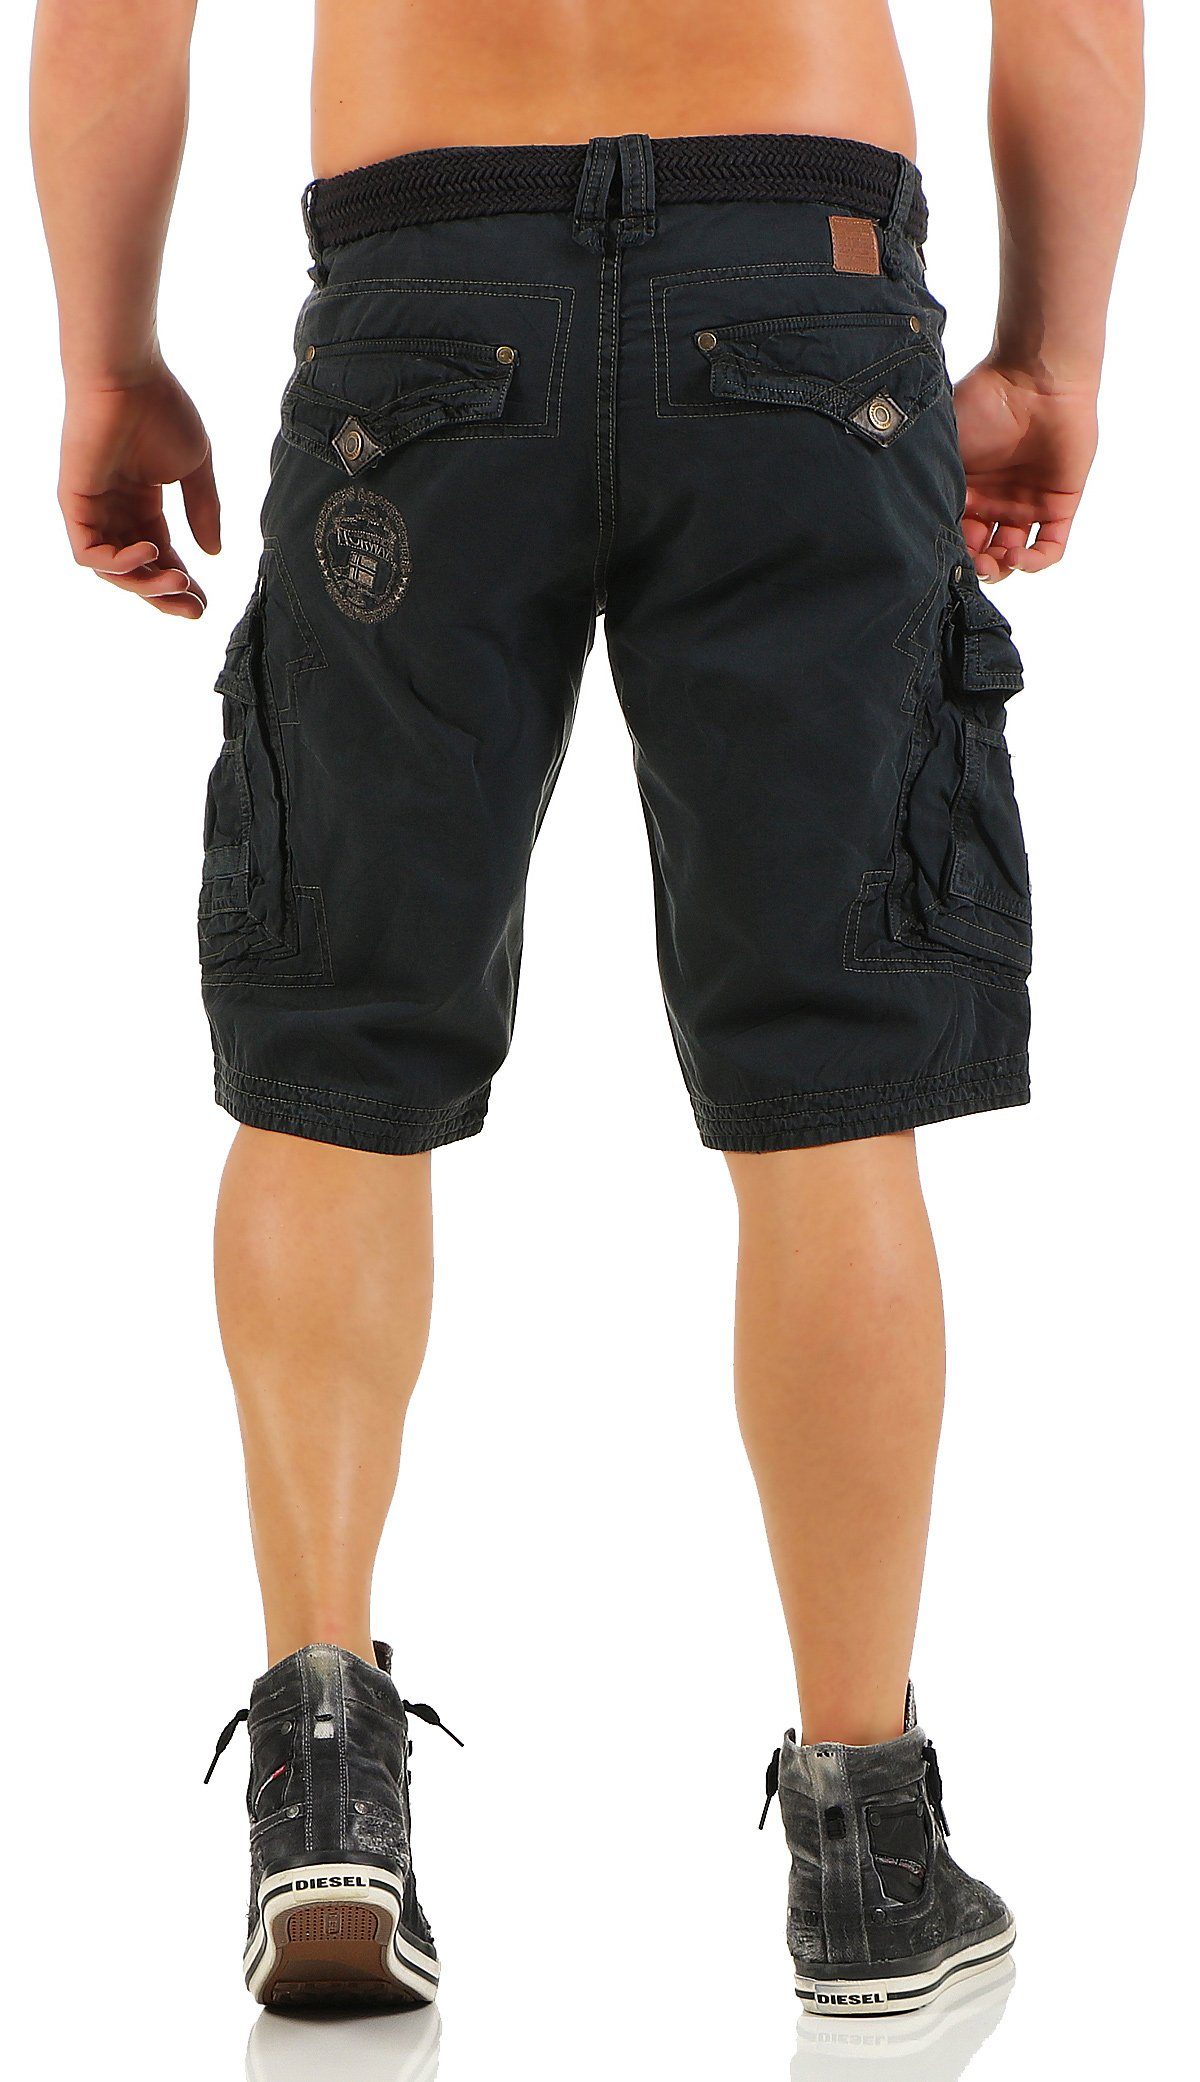 Norway Hose, kurze Cargoshorts Schwarz Shorts G-PERLE unifarben / Herren Geographical abnehmbarem Gürtel) Shorts, (mit camouflage